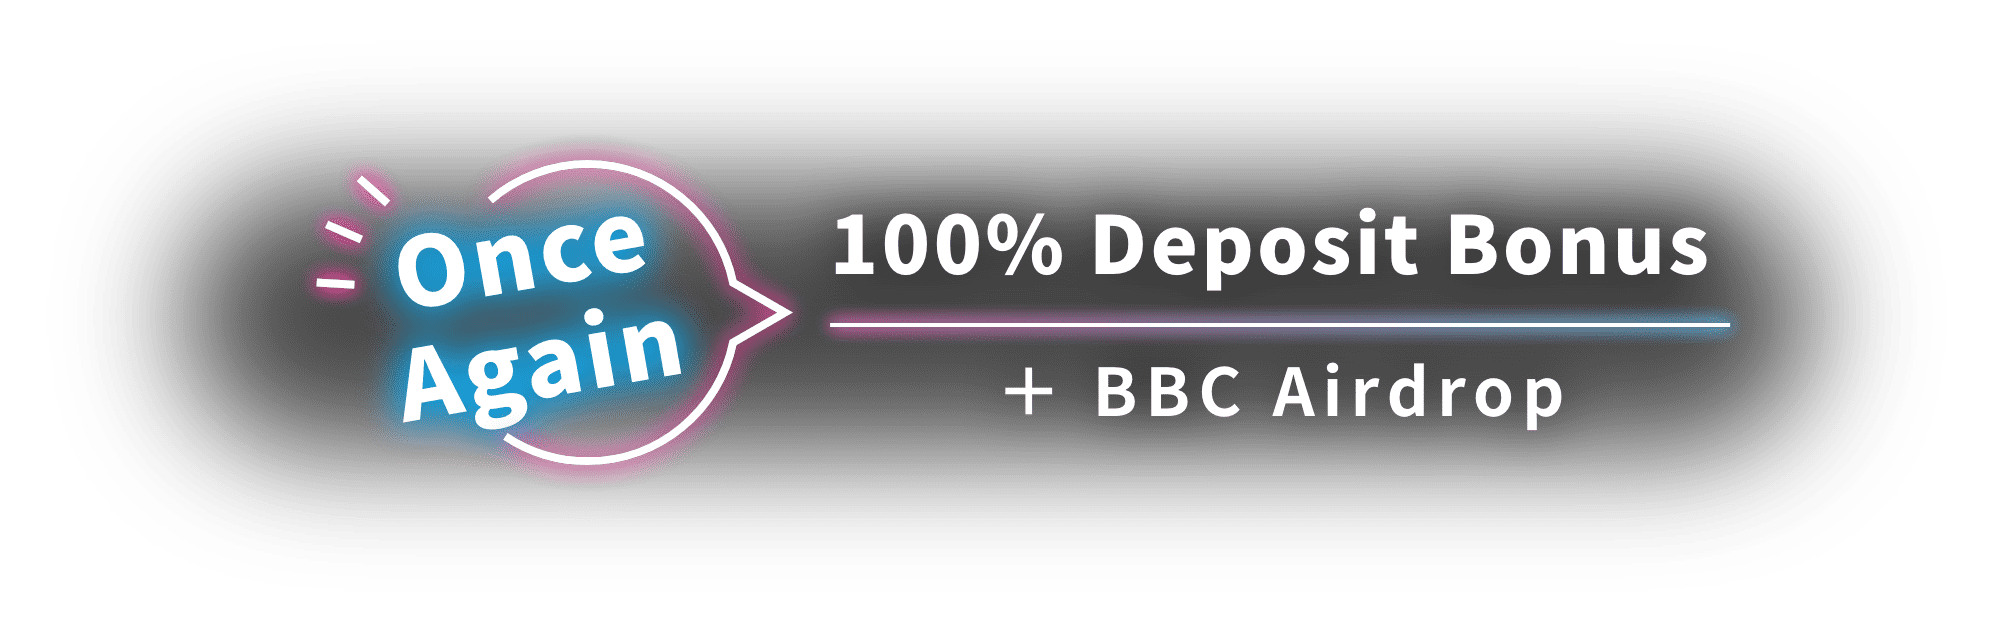 OnceAgain 100% Deposit Bonus ＋ BBC Airdrop